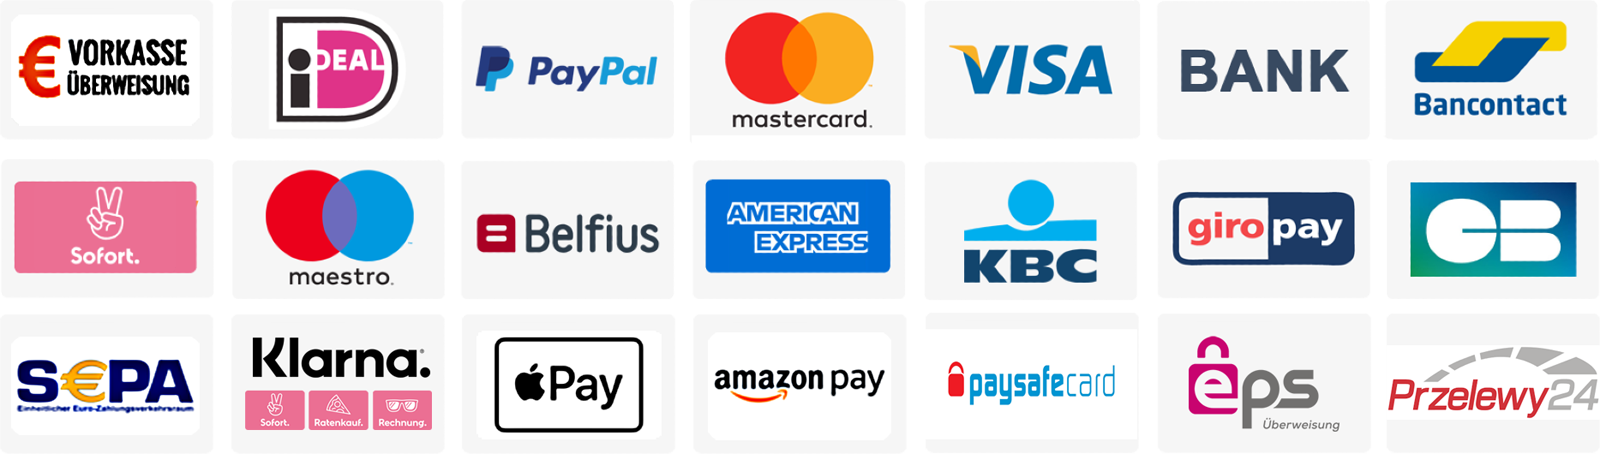 Logo Visa American Express Mastercard